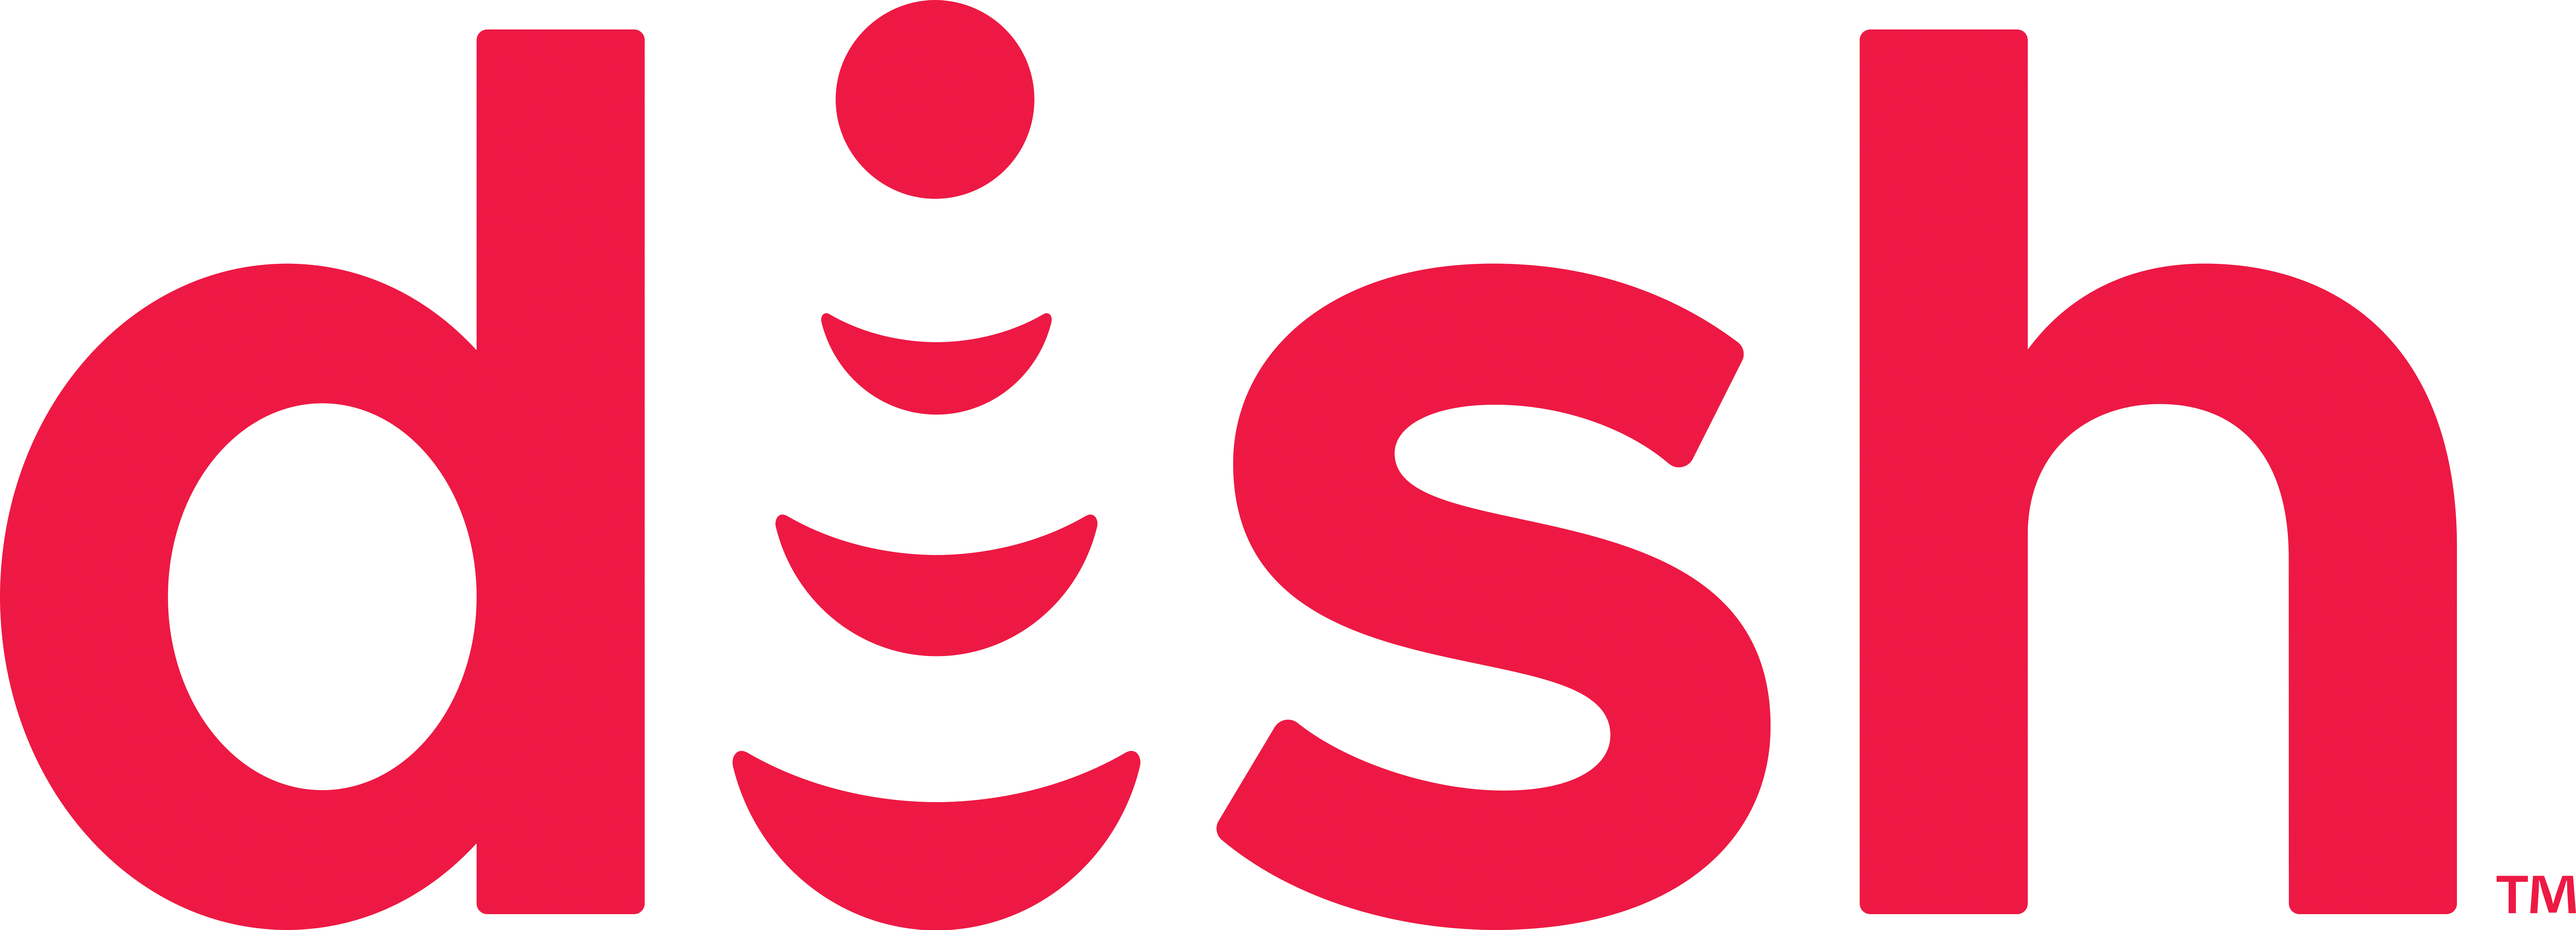 Dish Wordmark Red Logo 120618 Cmyk 1 - Dish Network Logo (7956x2872)